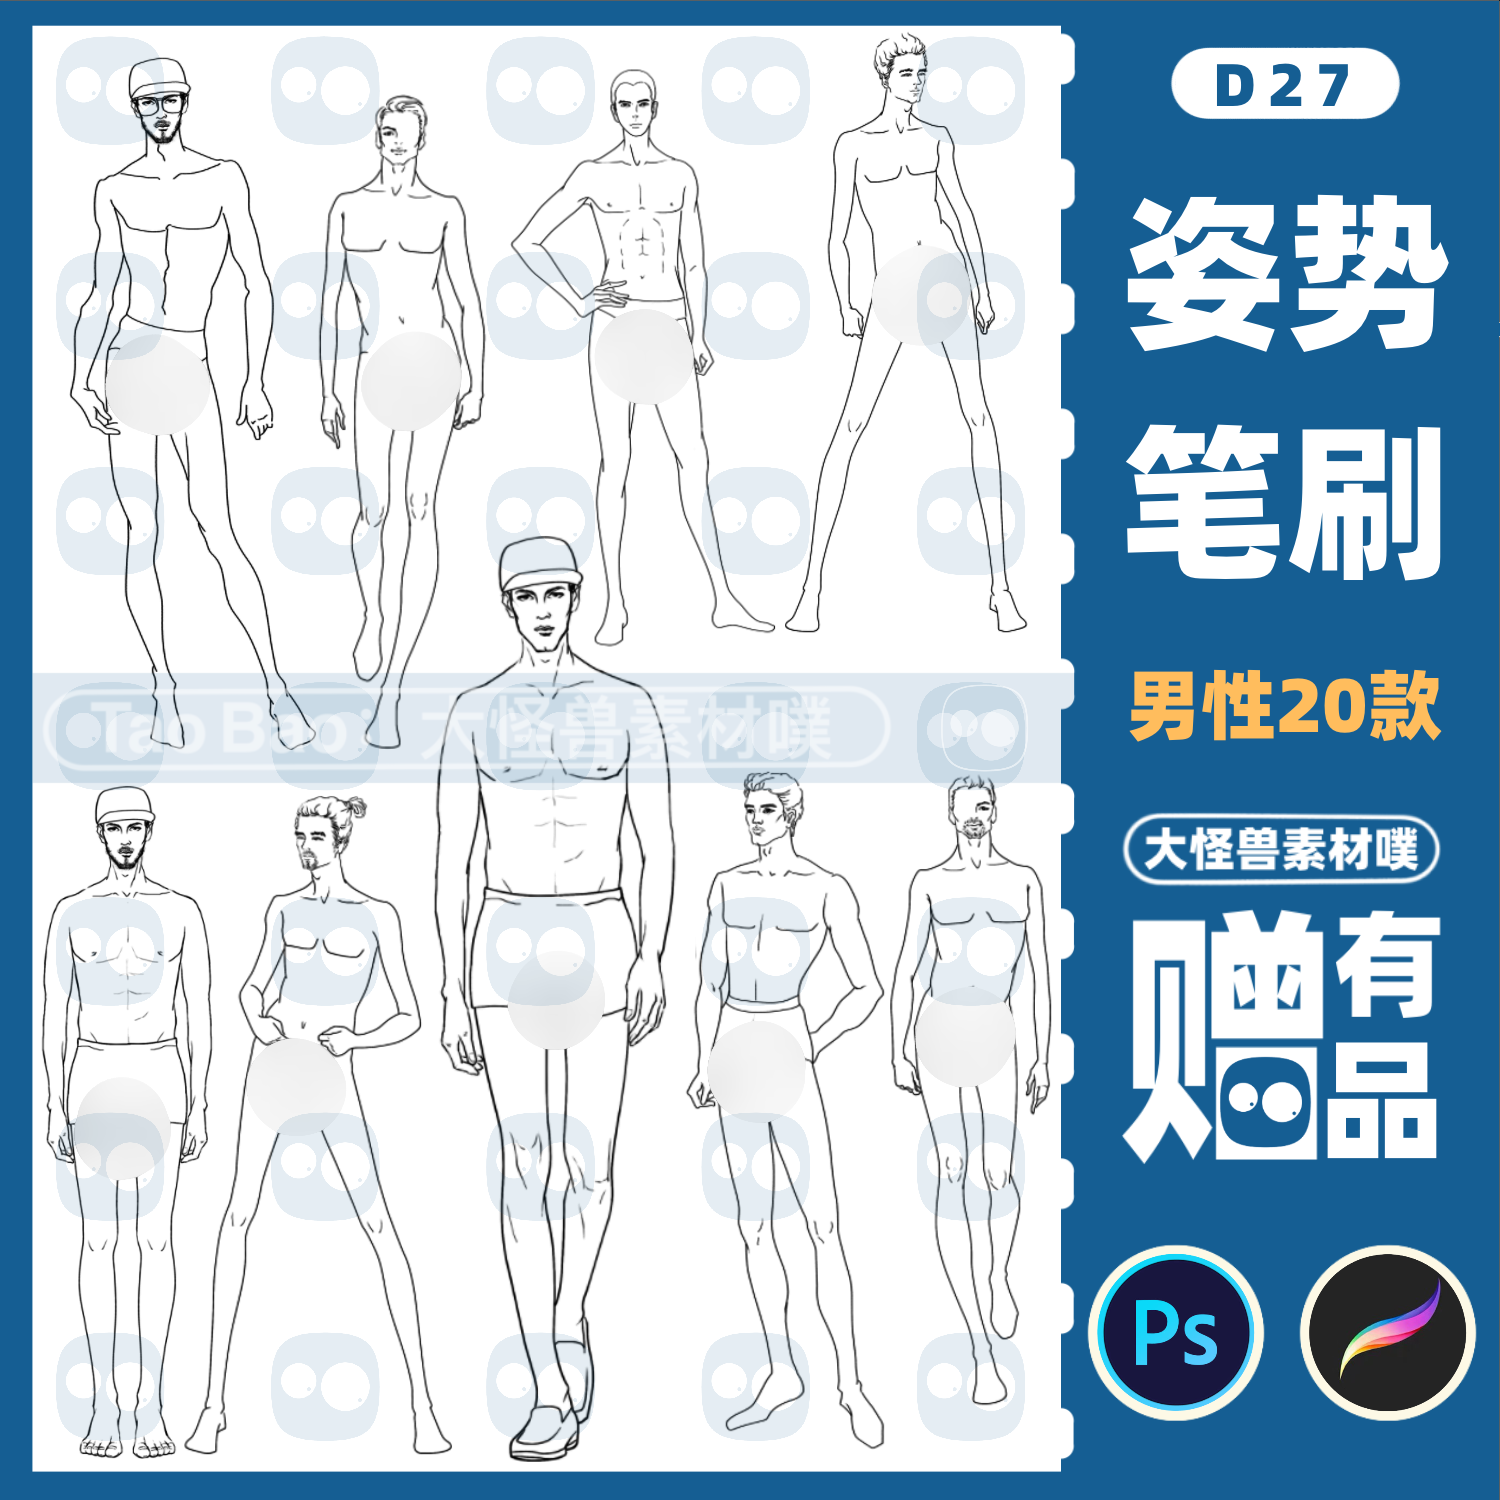 procreate笔刷ps人体造型男模特线稿服装设计参考ipad手绘素材D27